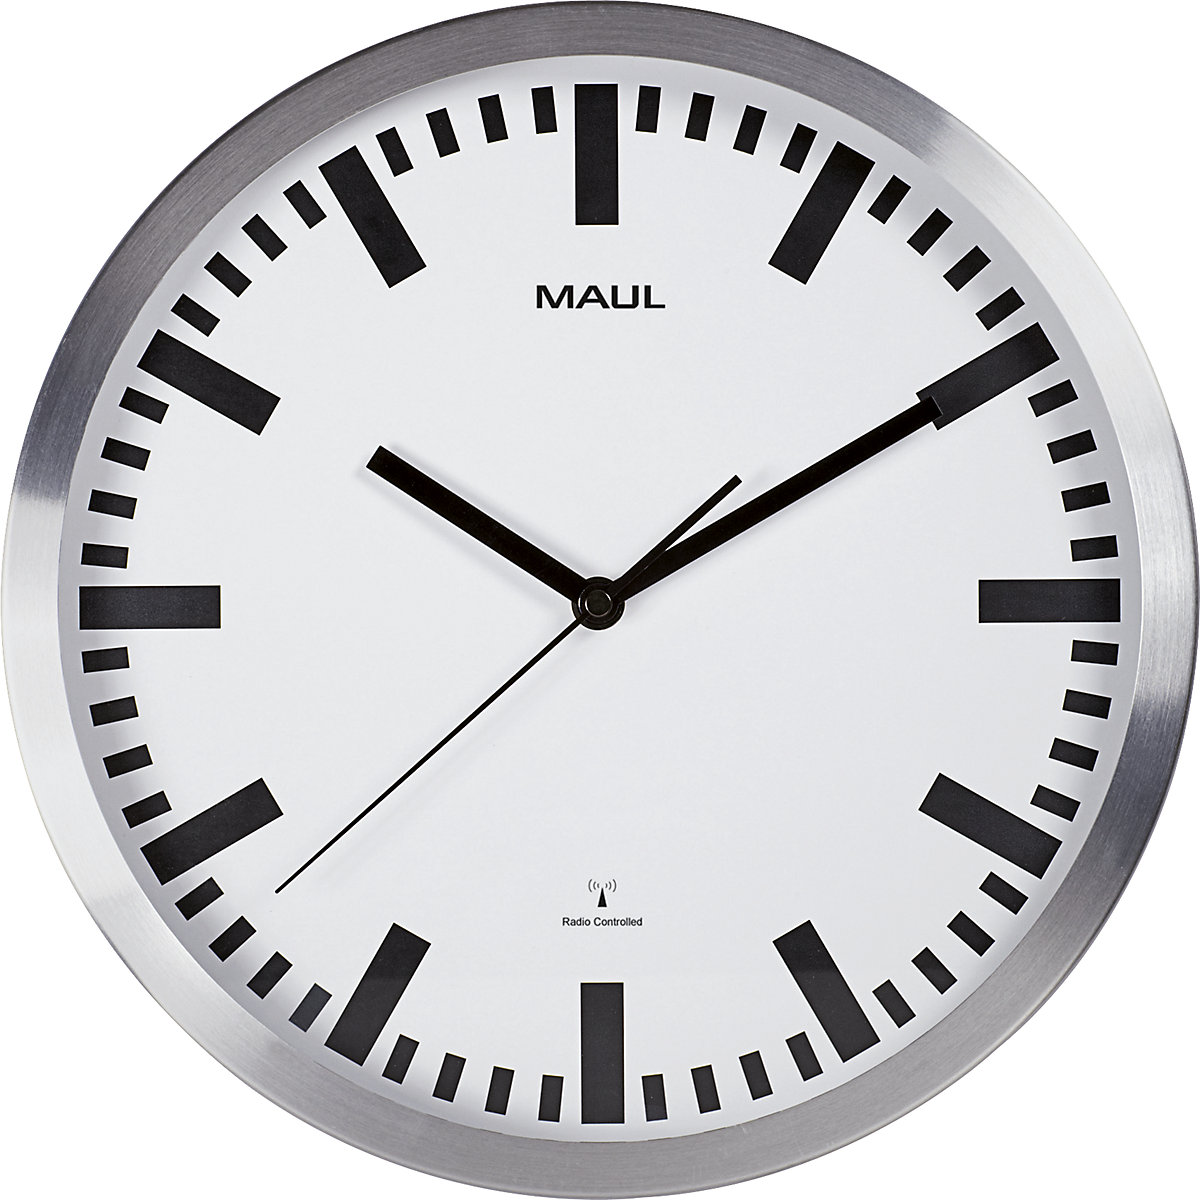 MAULpilot wall clock - MAUL